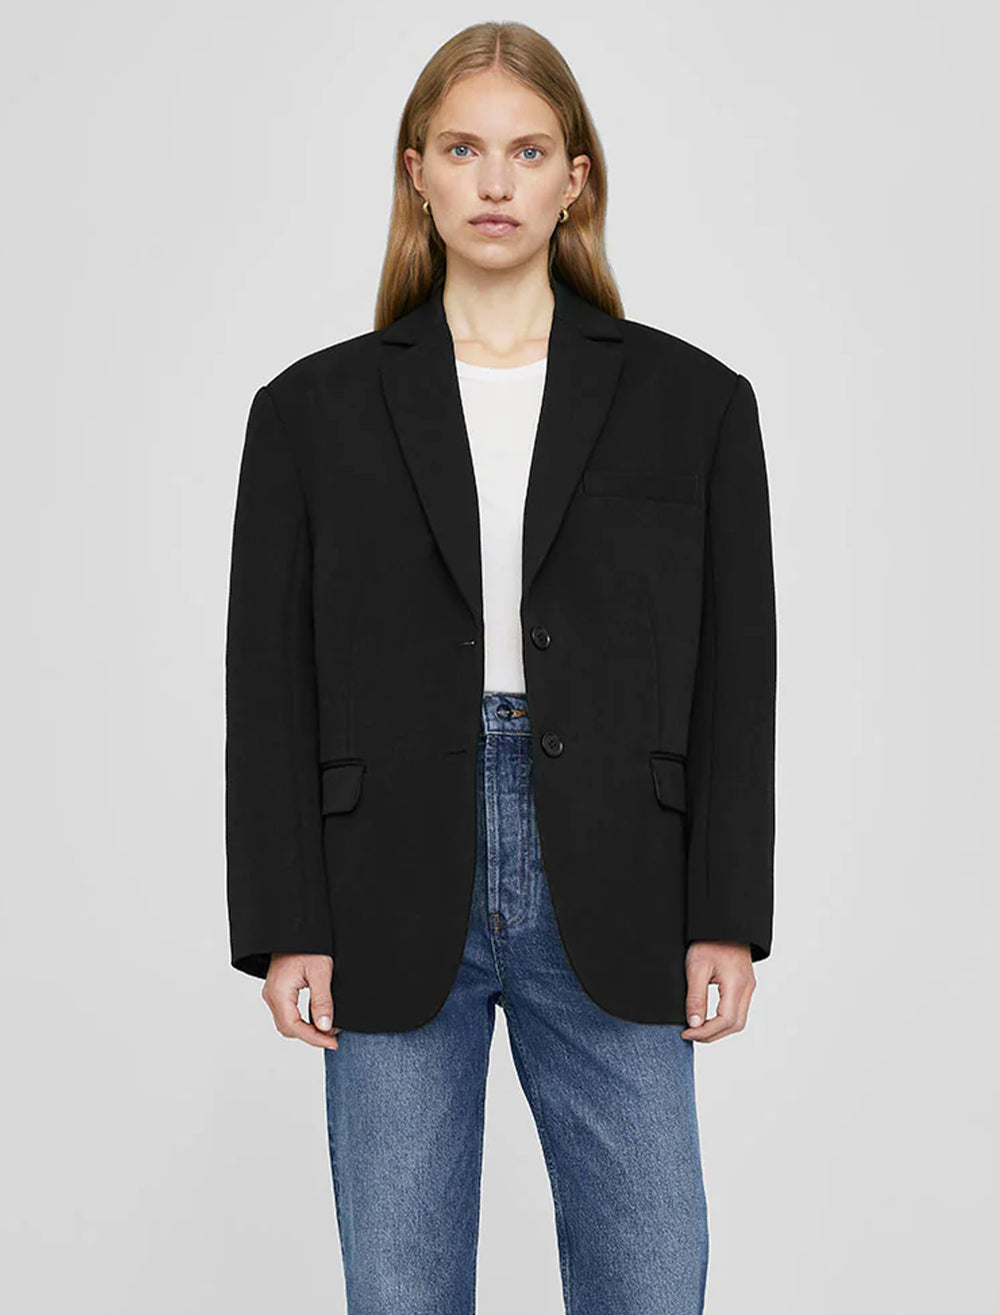 Model wearing Anine Bing's quinn blazer in black.